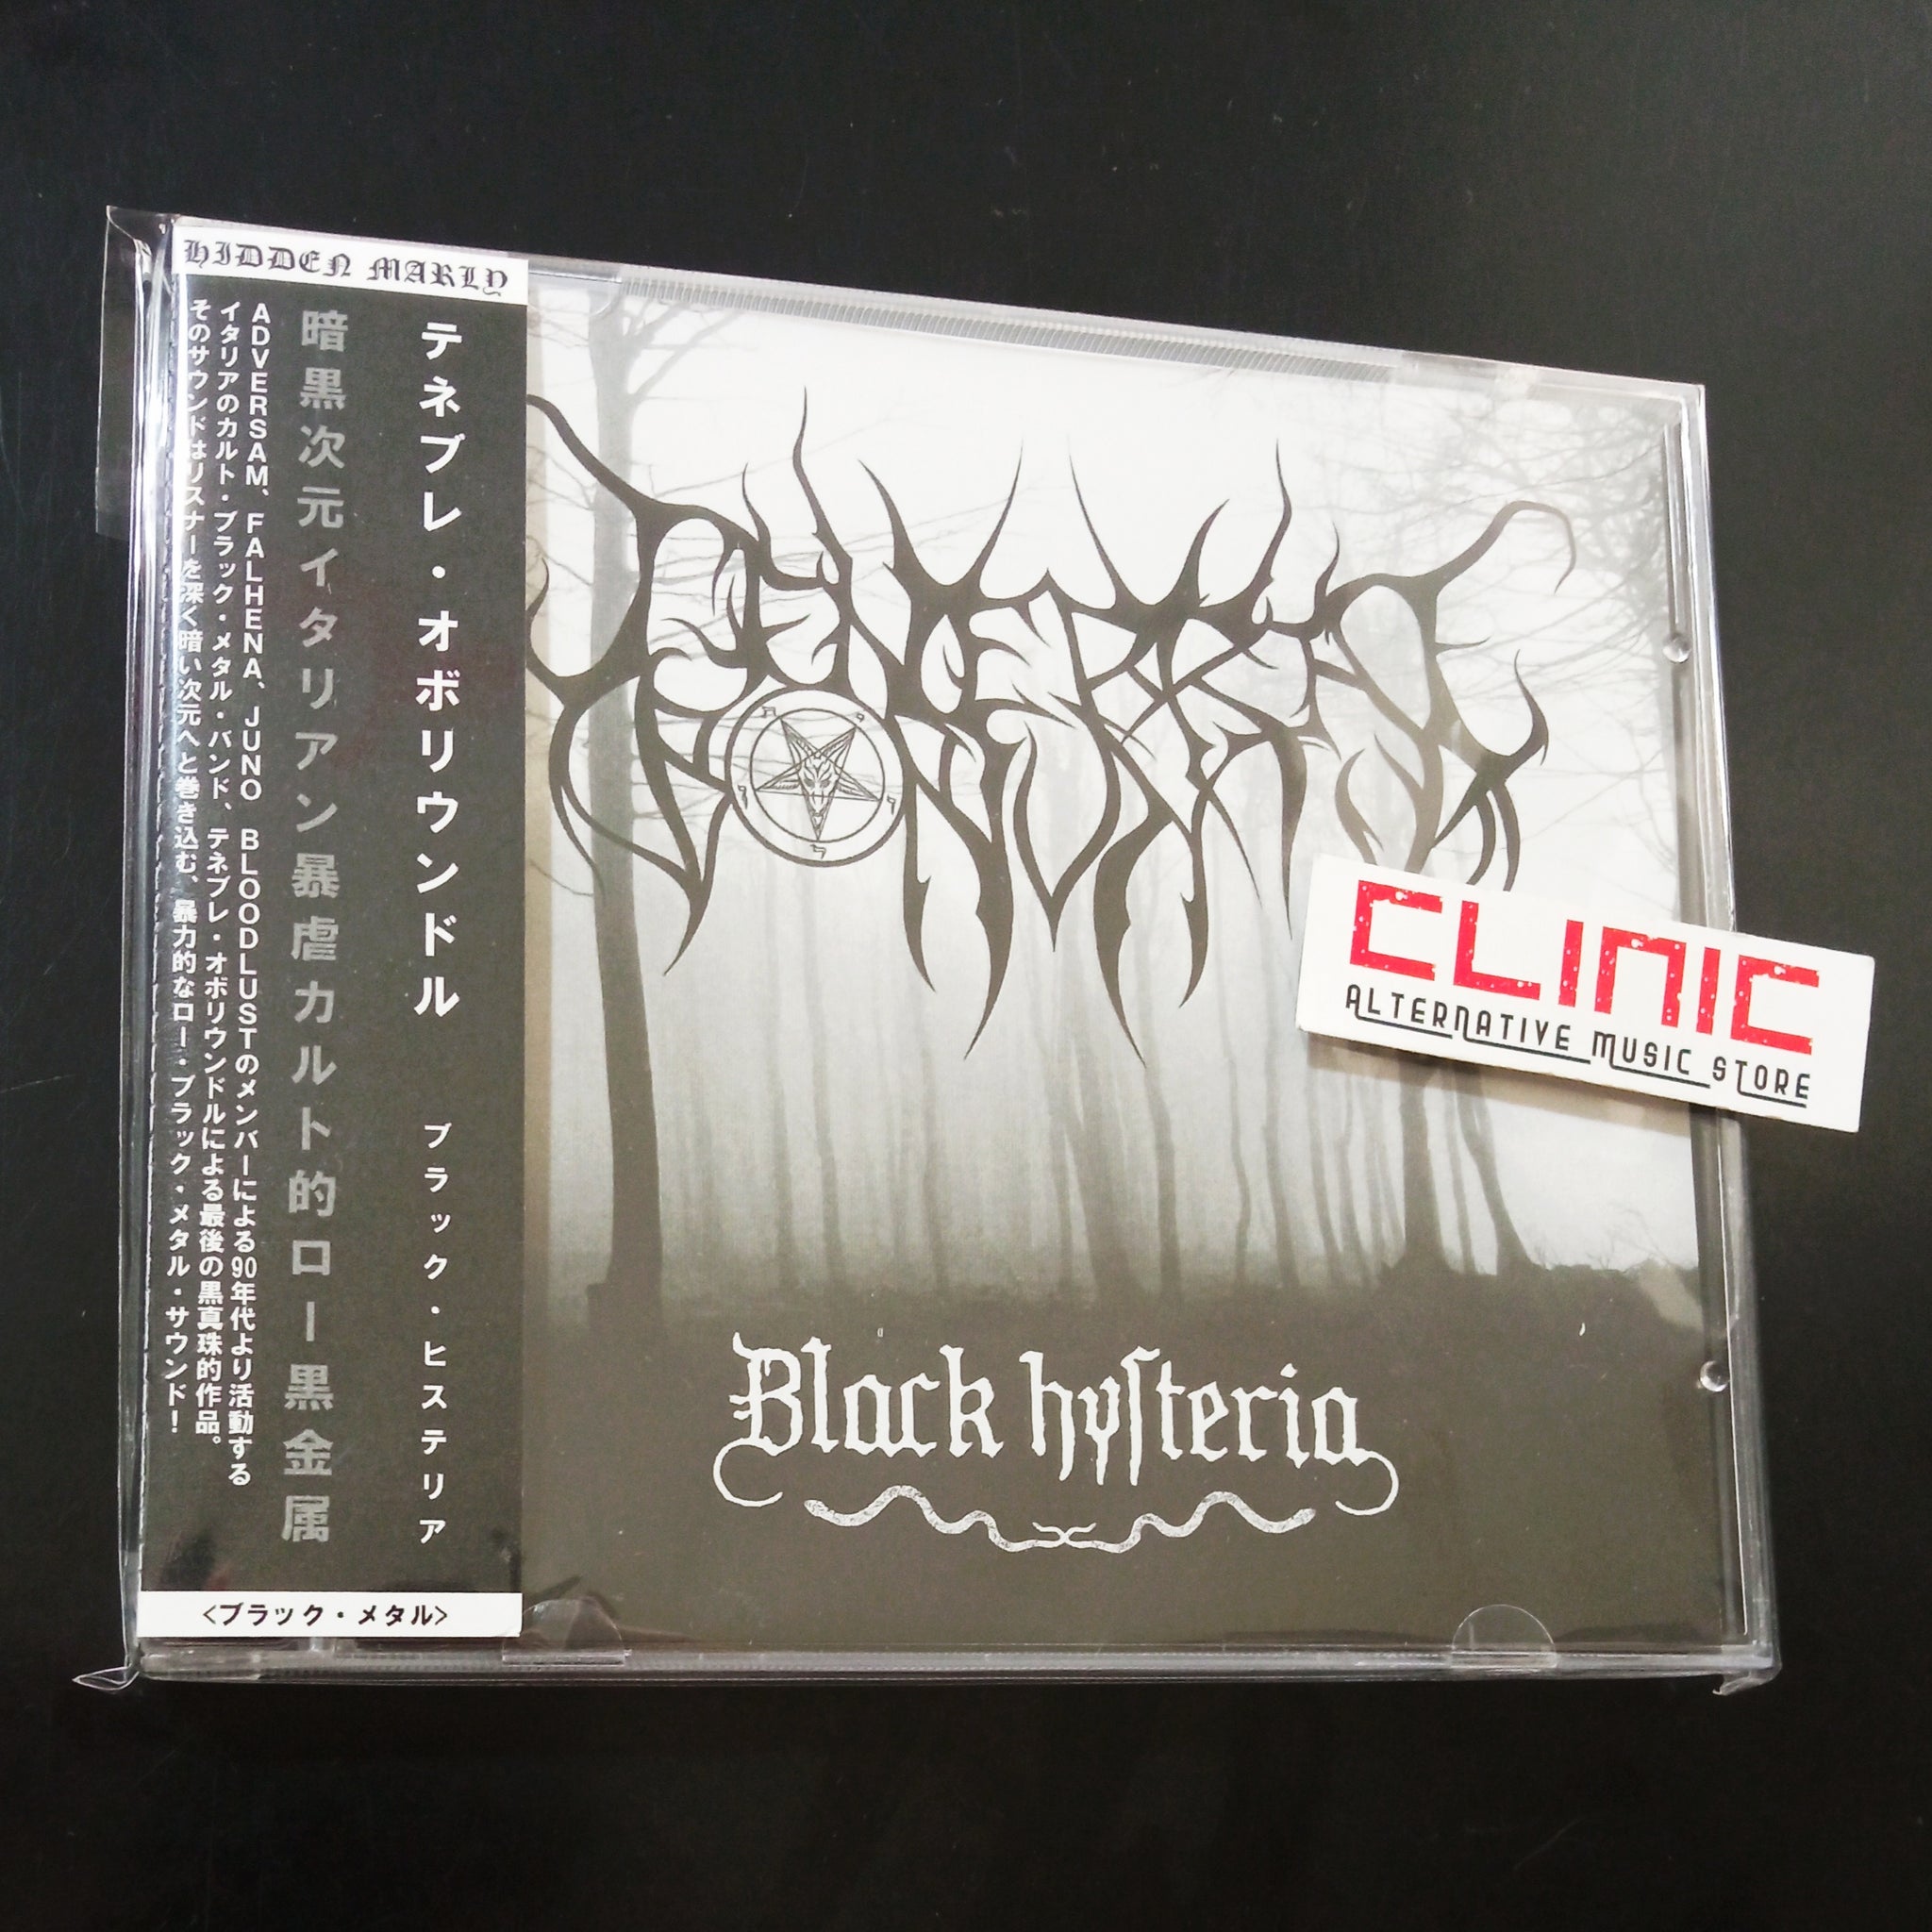 CD - TENEBRAE OBORIUNTUR - BLACK HYSTERIA (EP)